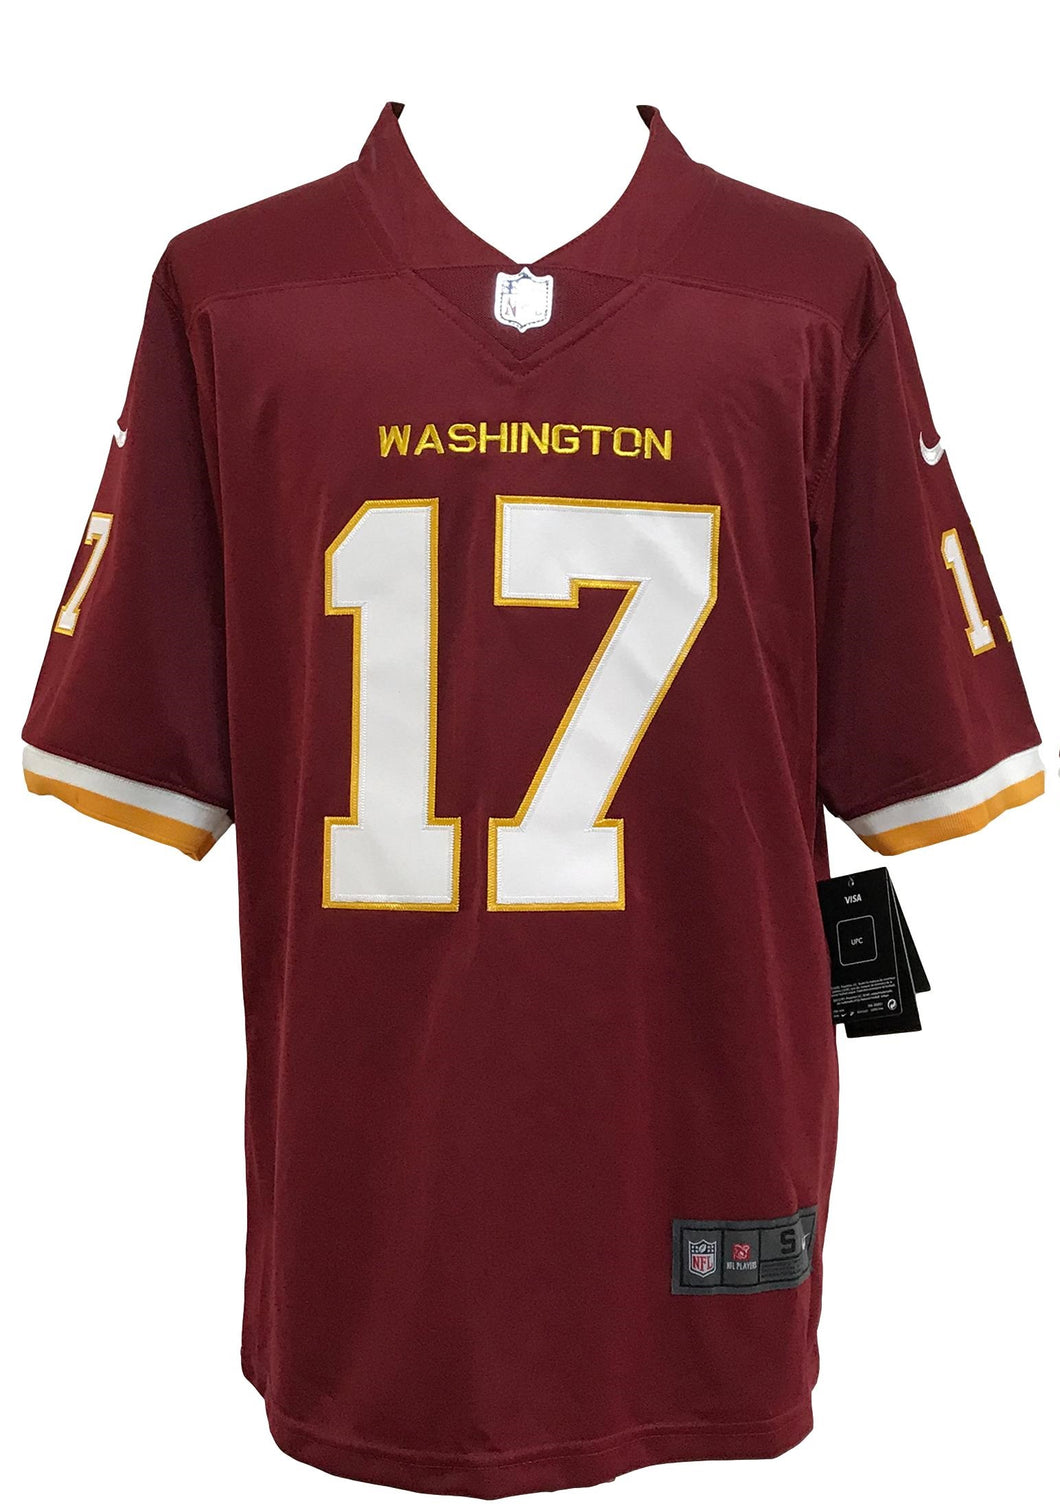 Camisa Washington Redskins Terry McLaurin  #17 NFL